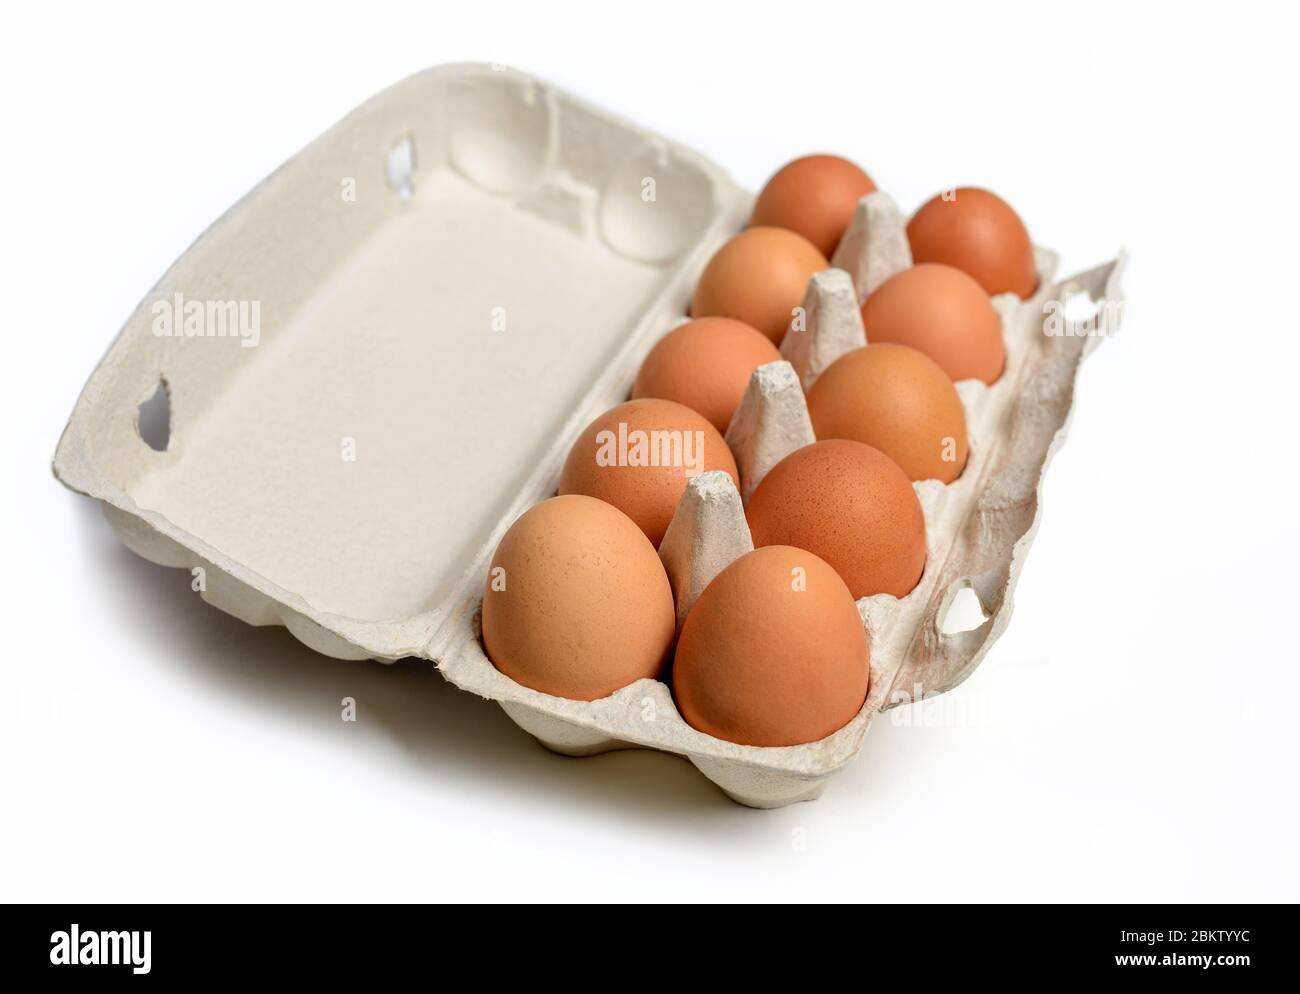 Ten brown eggs in a carton package. Top view. Ten brown eggs in a cardboard box. Eggs. Stock Photo